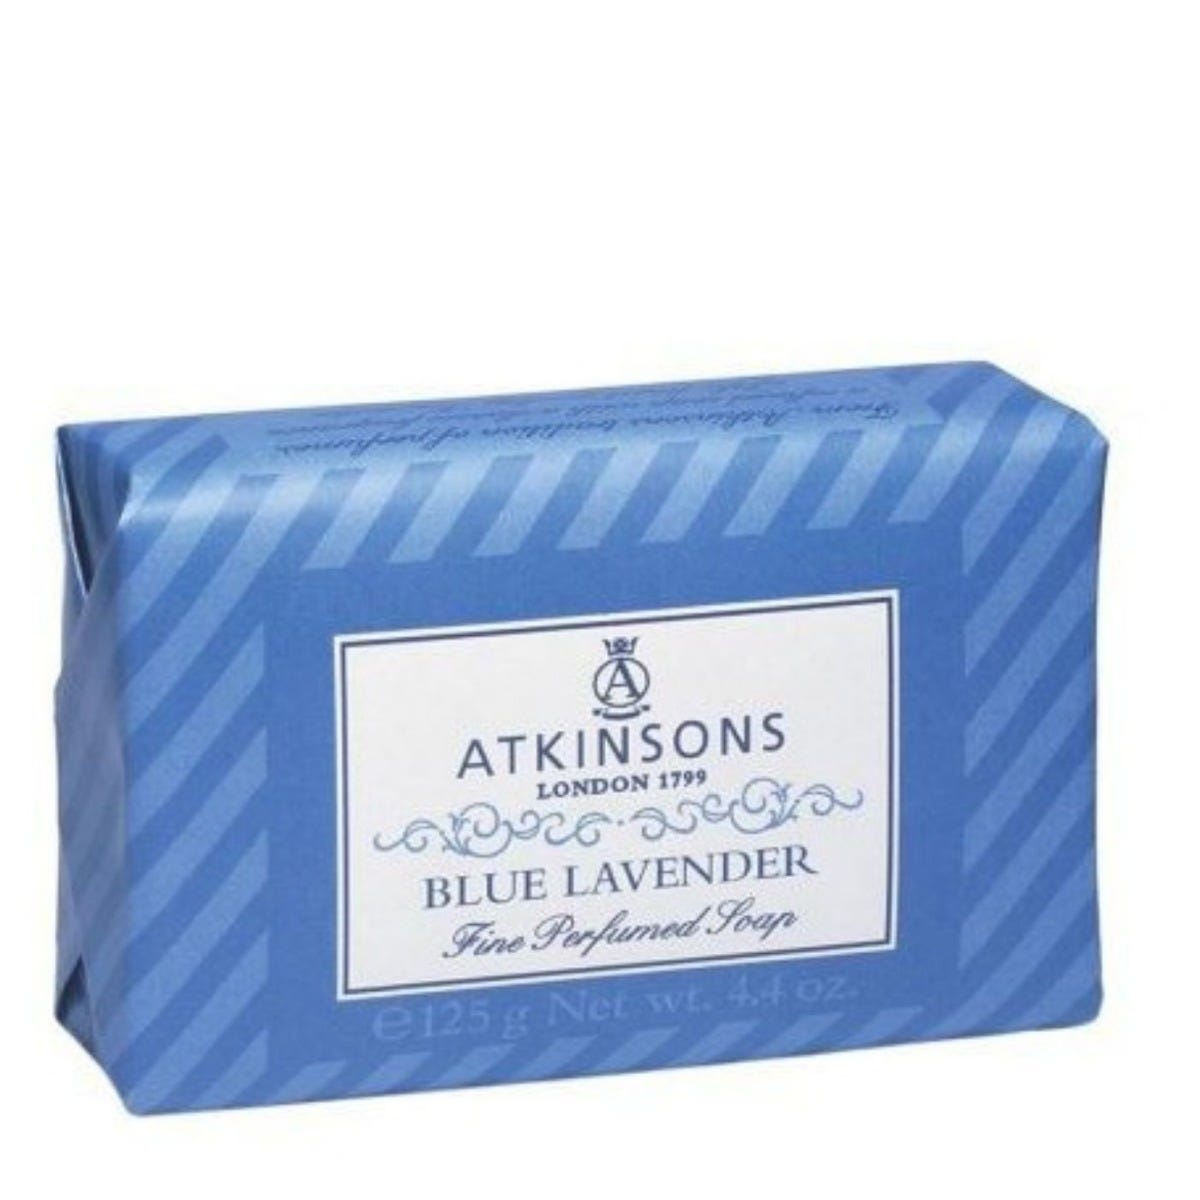 Fine Perfumed Soap Normal Size Blue Lavender 125g